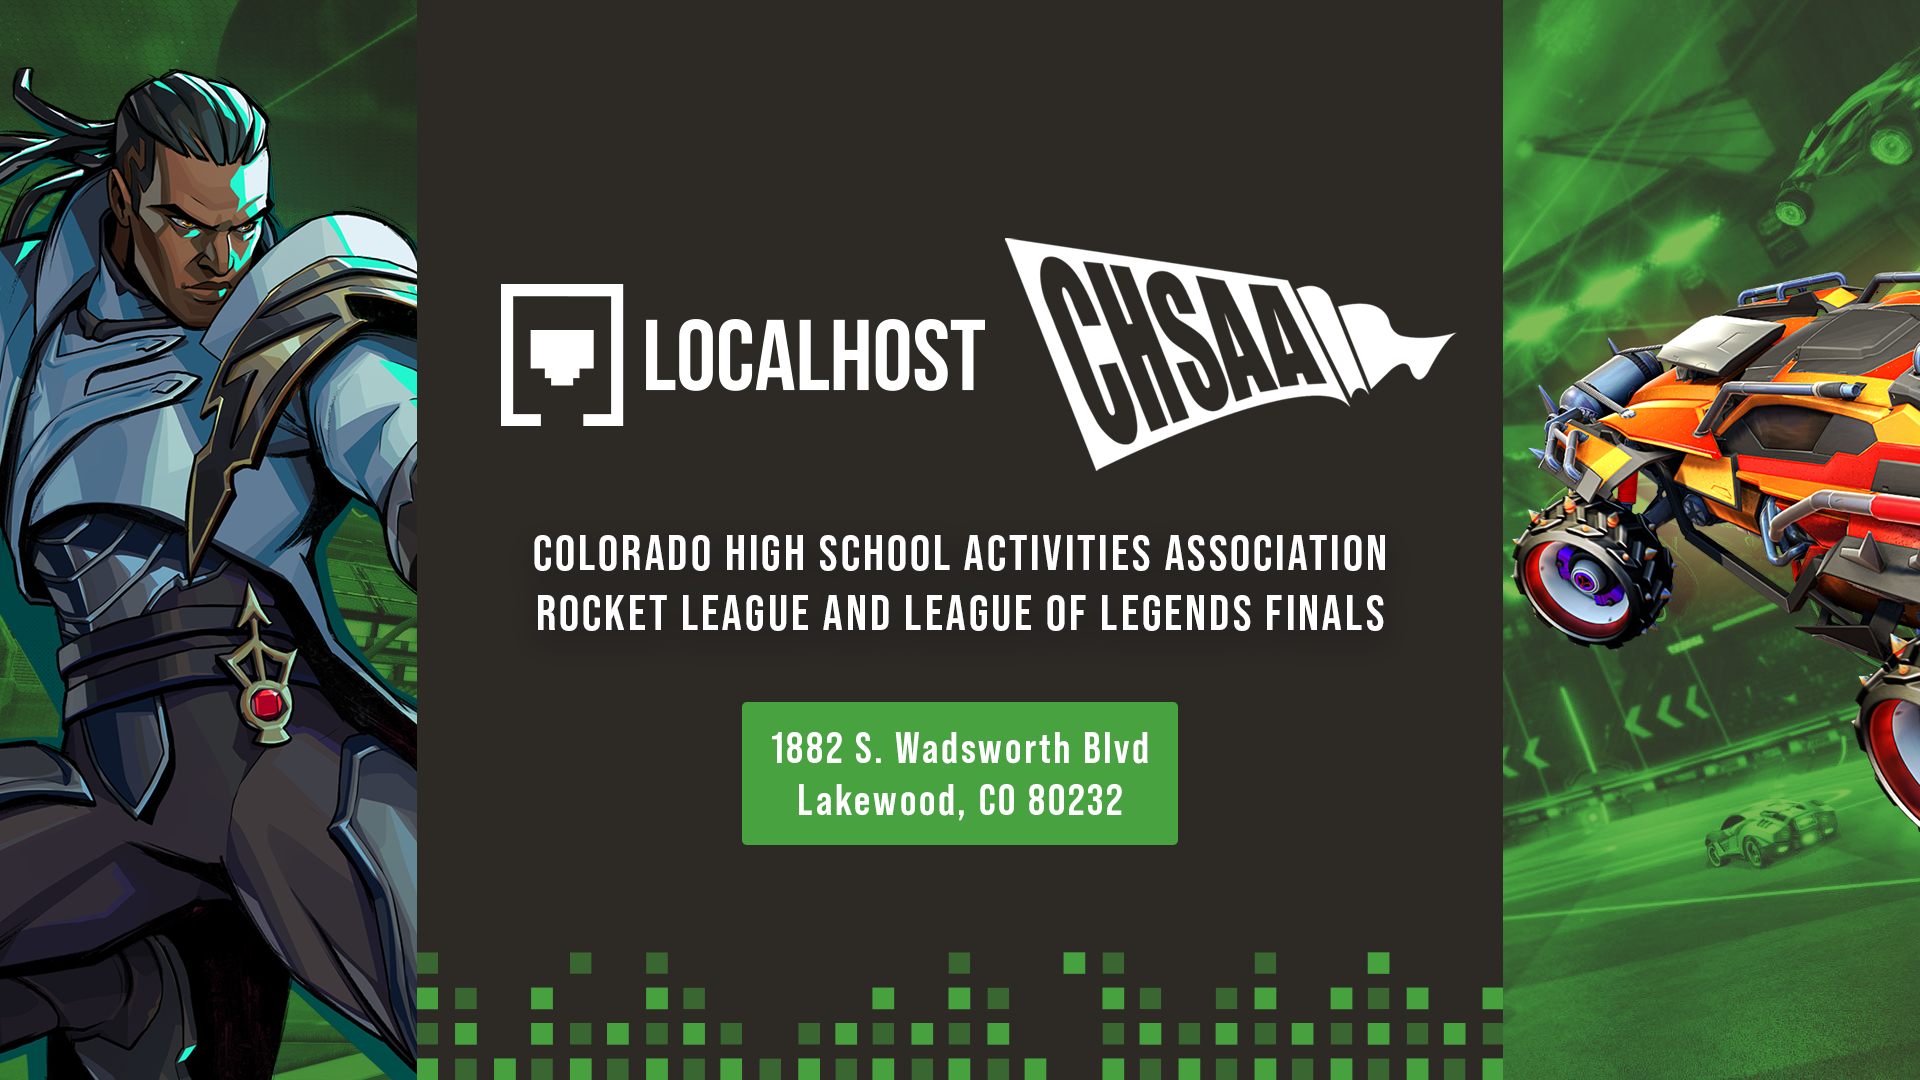 Nerd Street Localhost in Denver, CO Hosts the Colorado High School Activities Association (CHSAA) Rocket League and League of Legends Finals